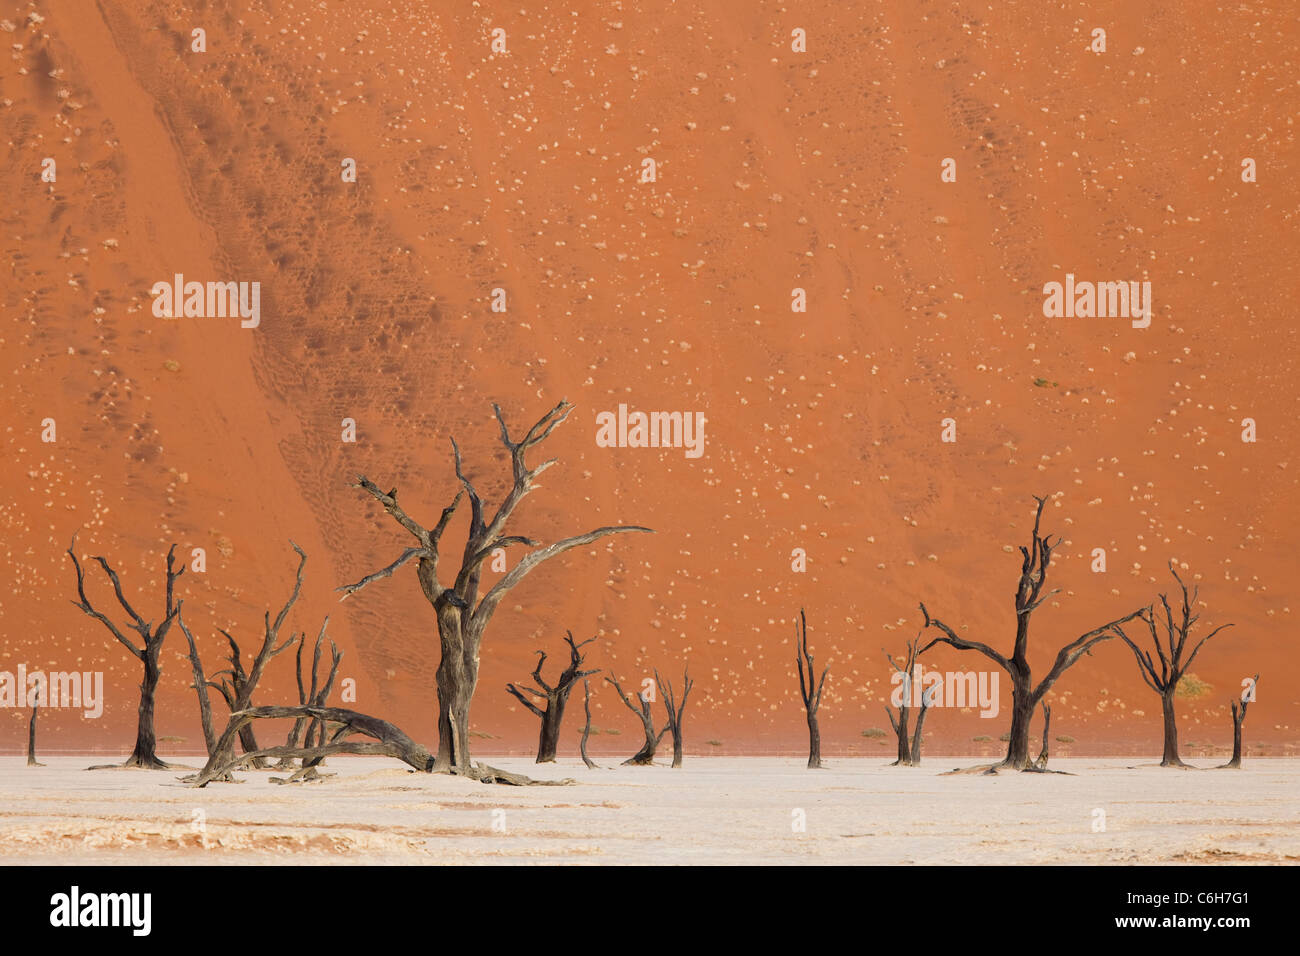 Árboles de acacia muerta contra el fondo de la duna de arena Foto de stock